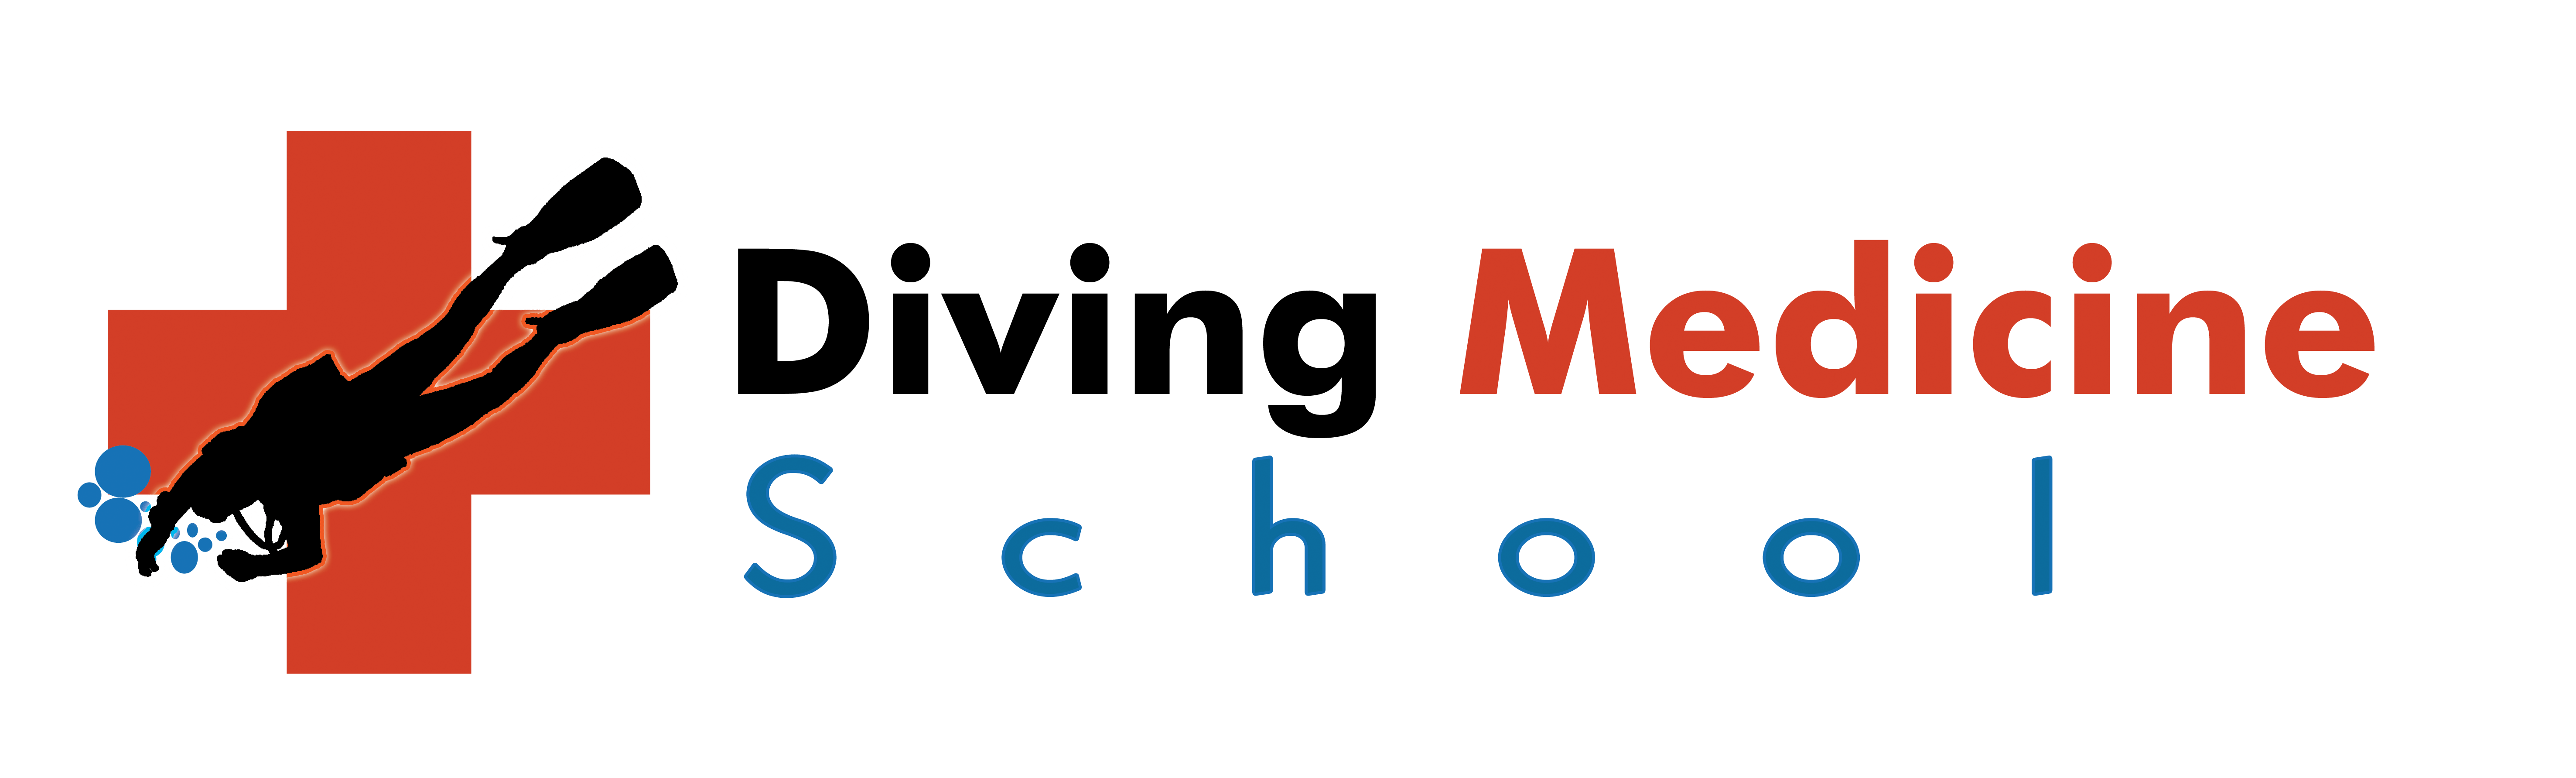 Diving Medicine School